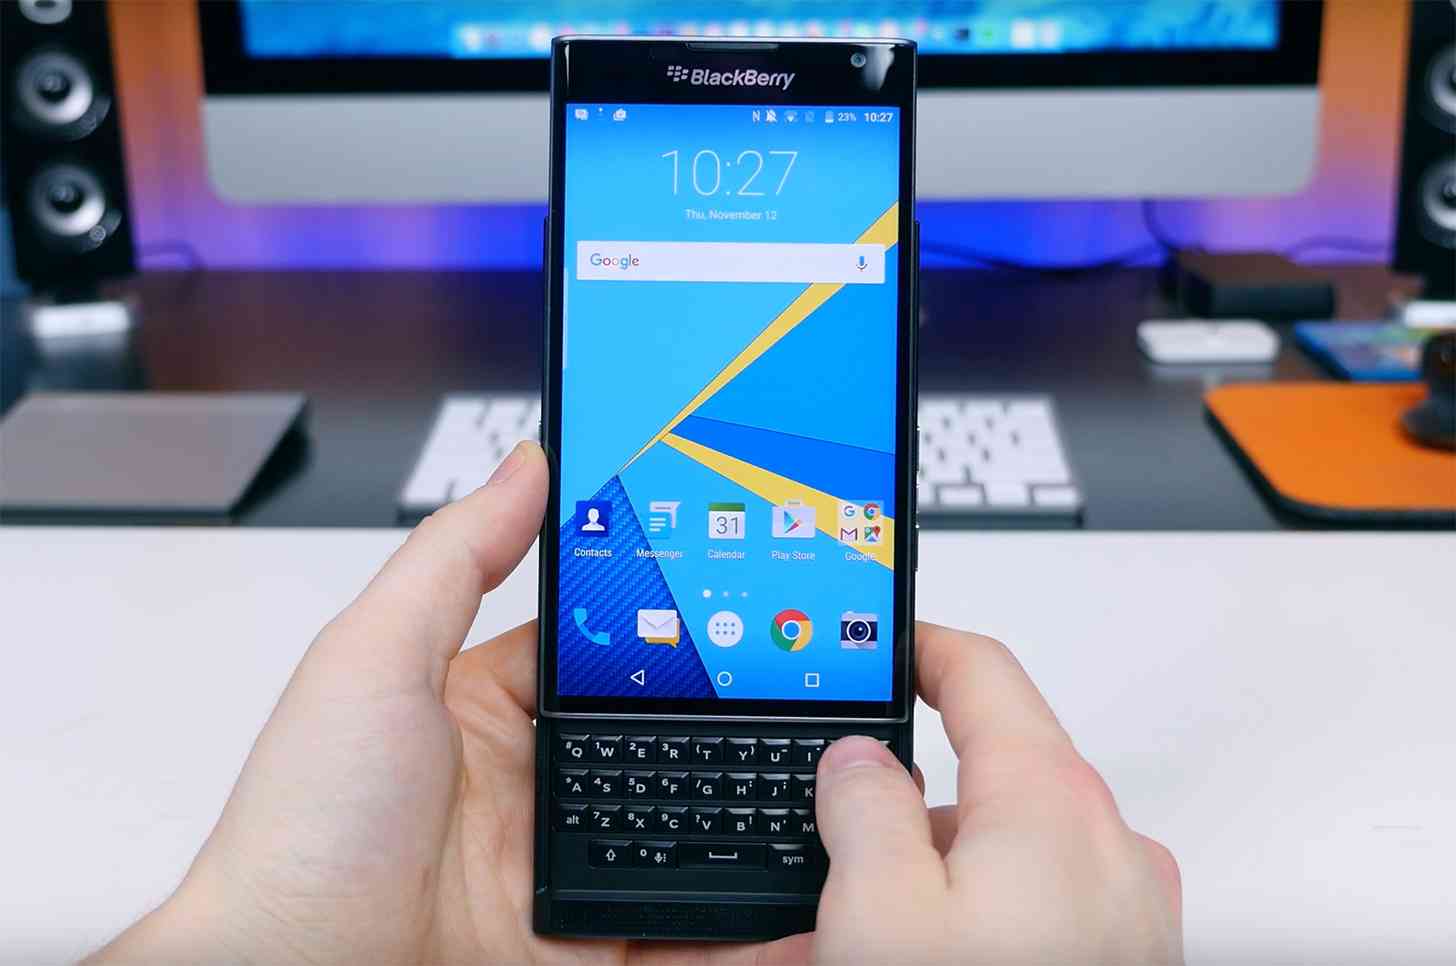 BlackBerry Priv hands-on video